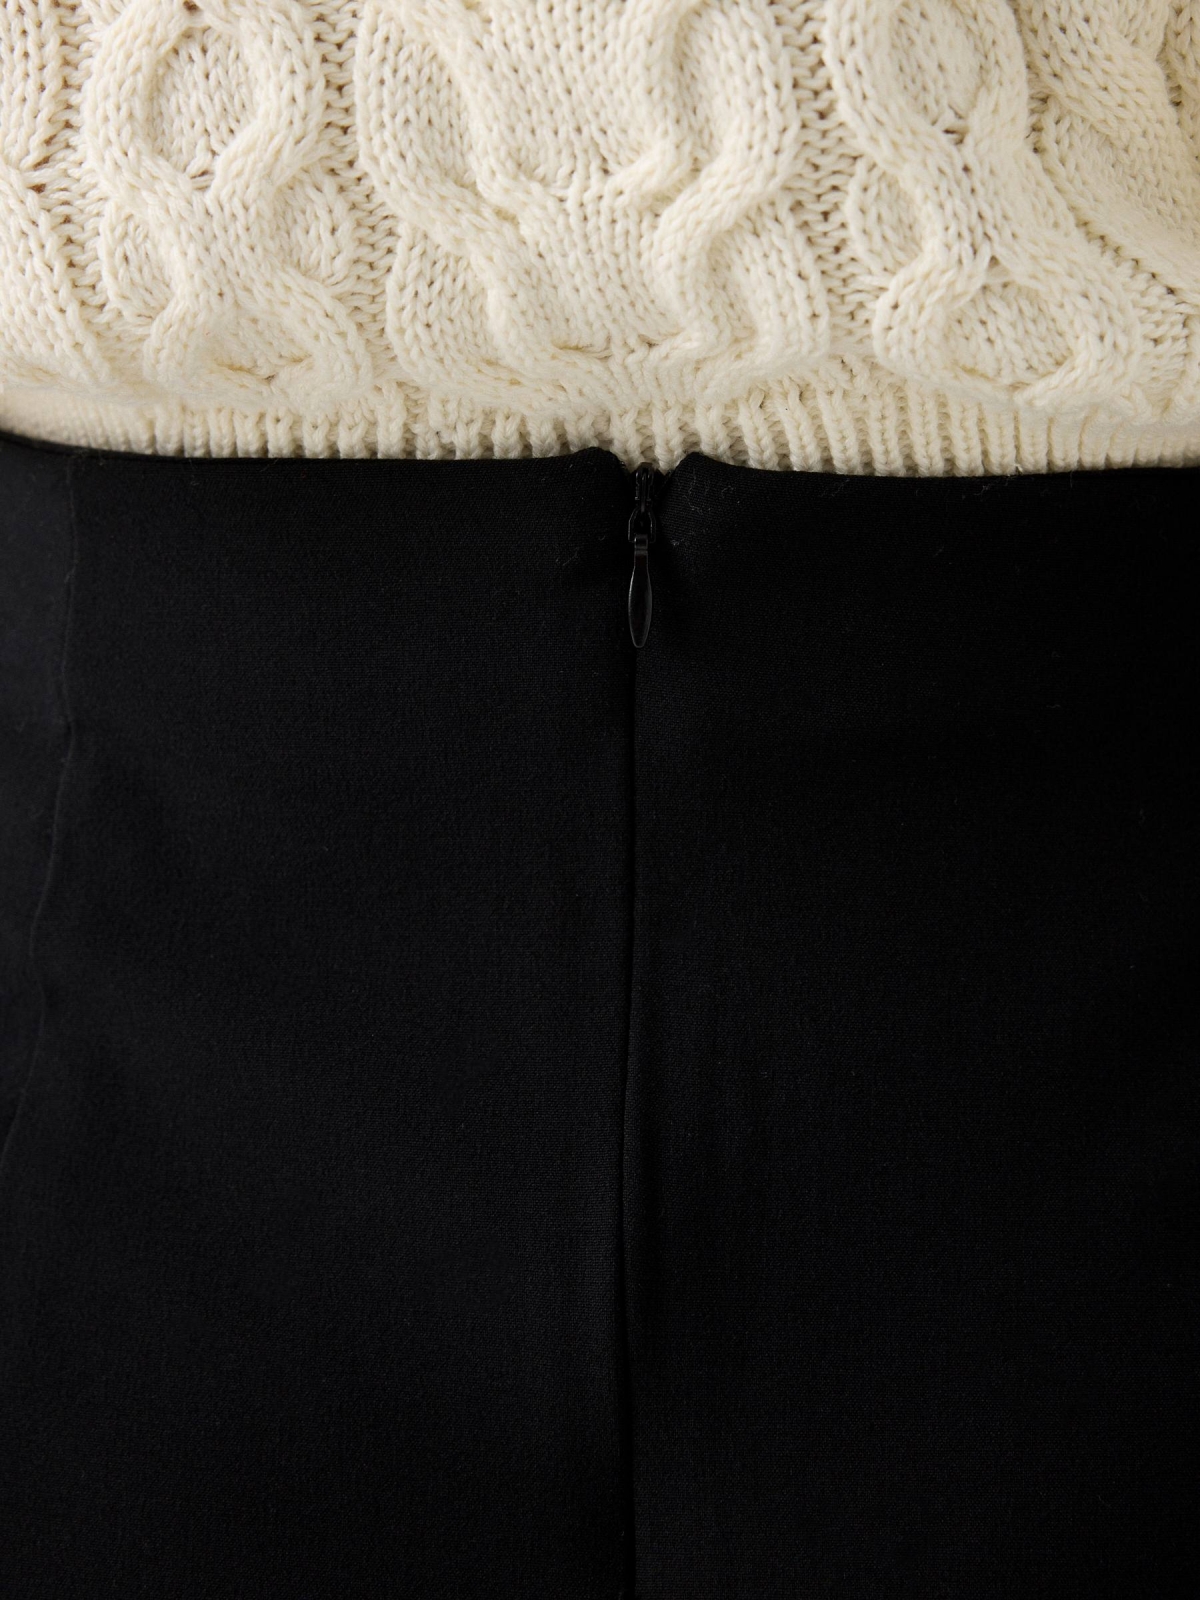 Tailored wrap skirt black detail view